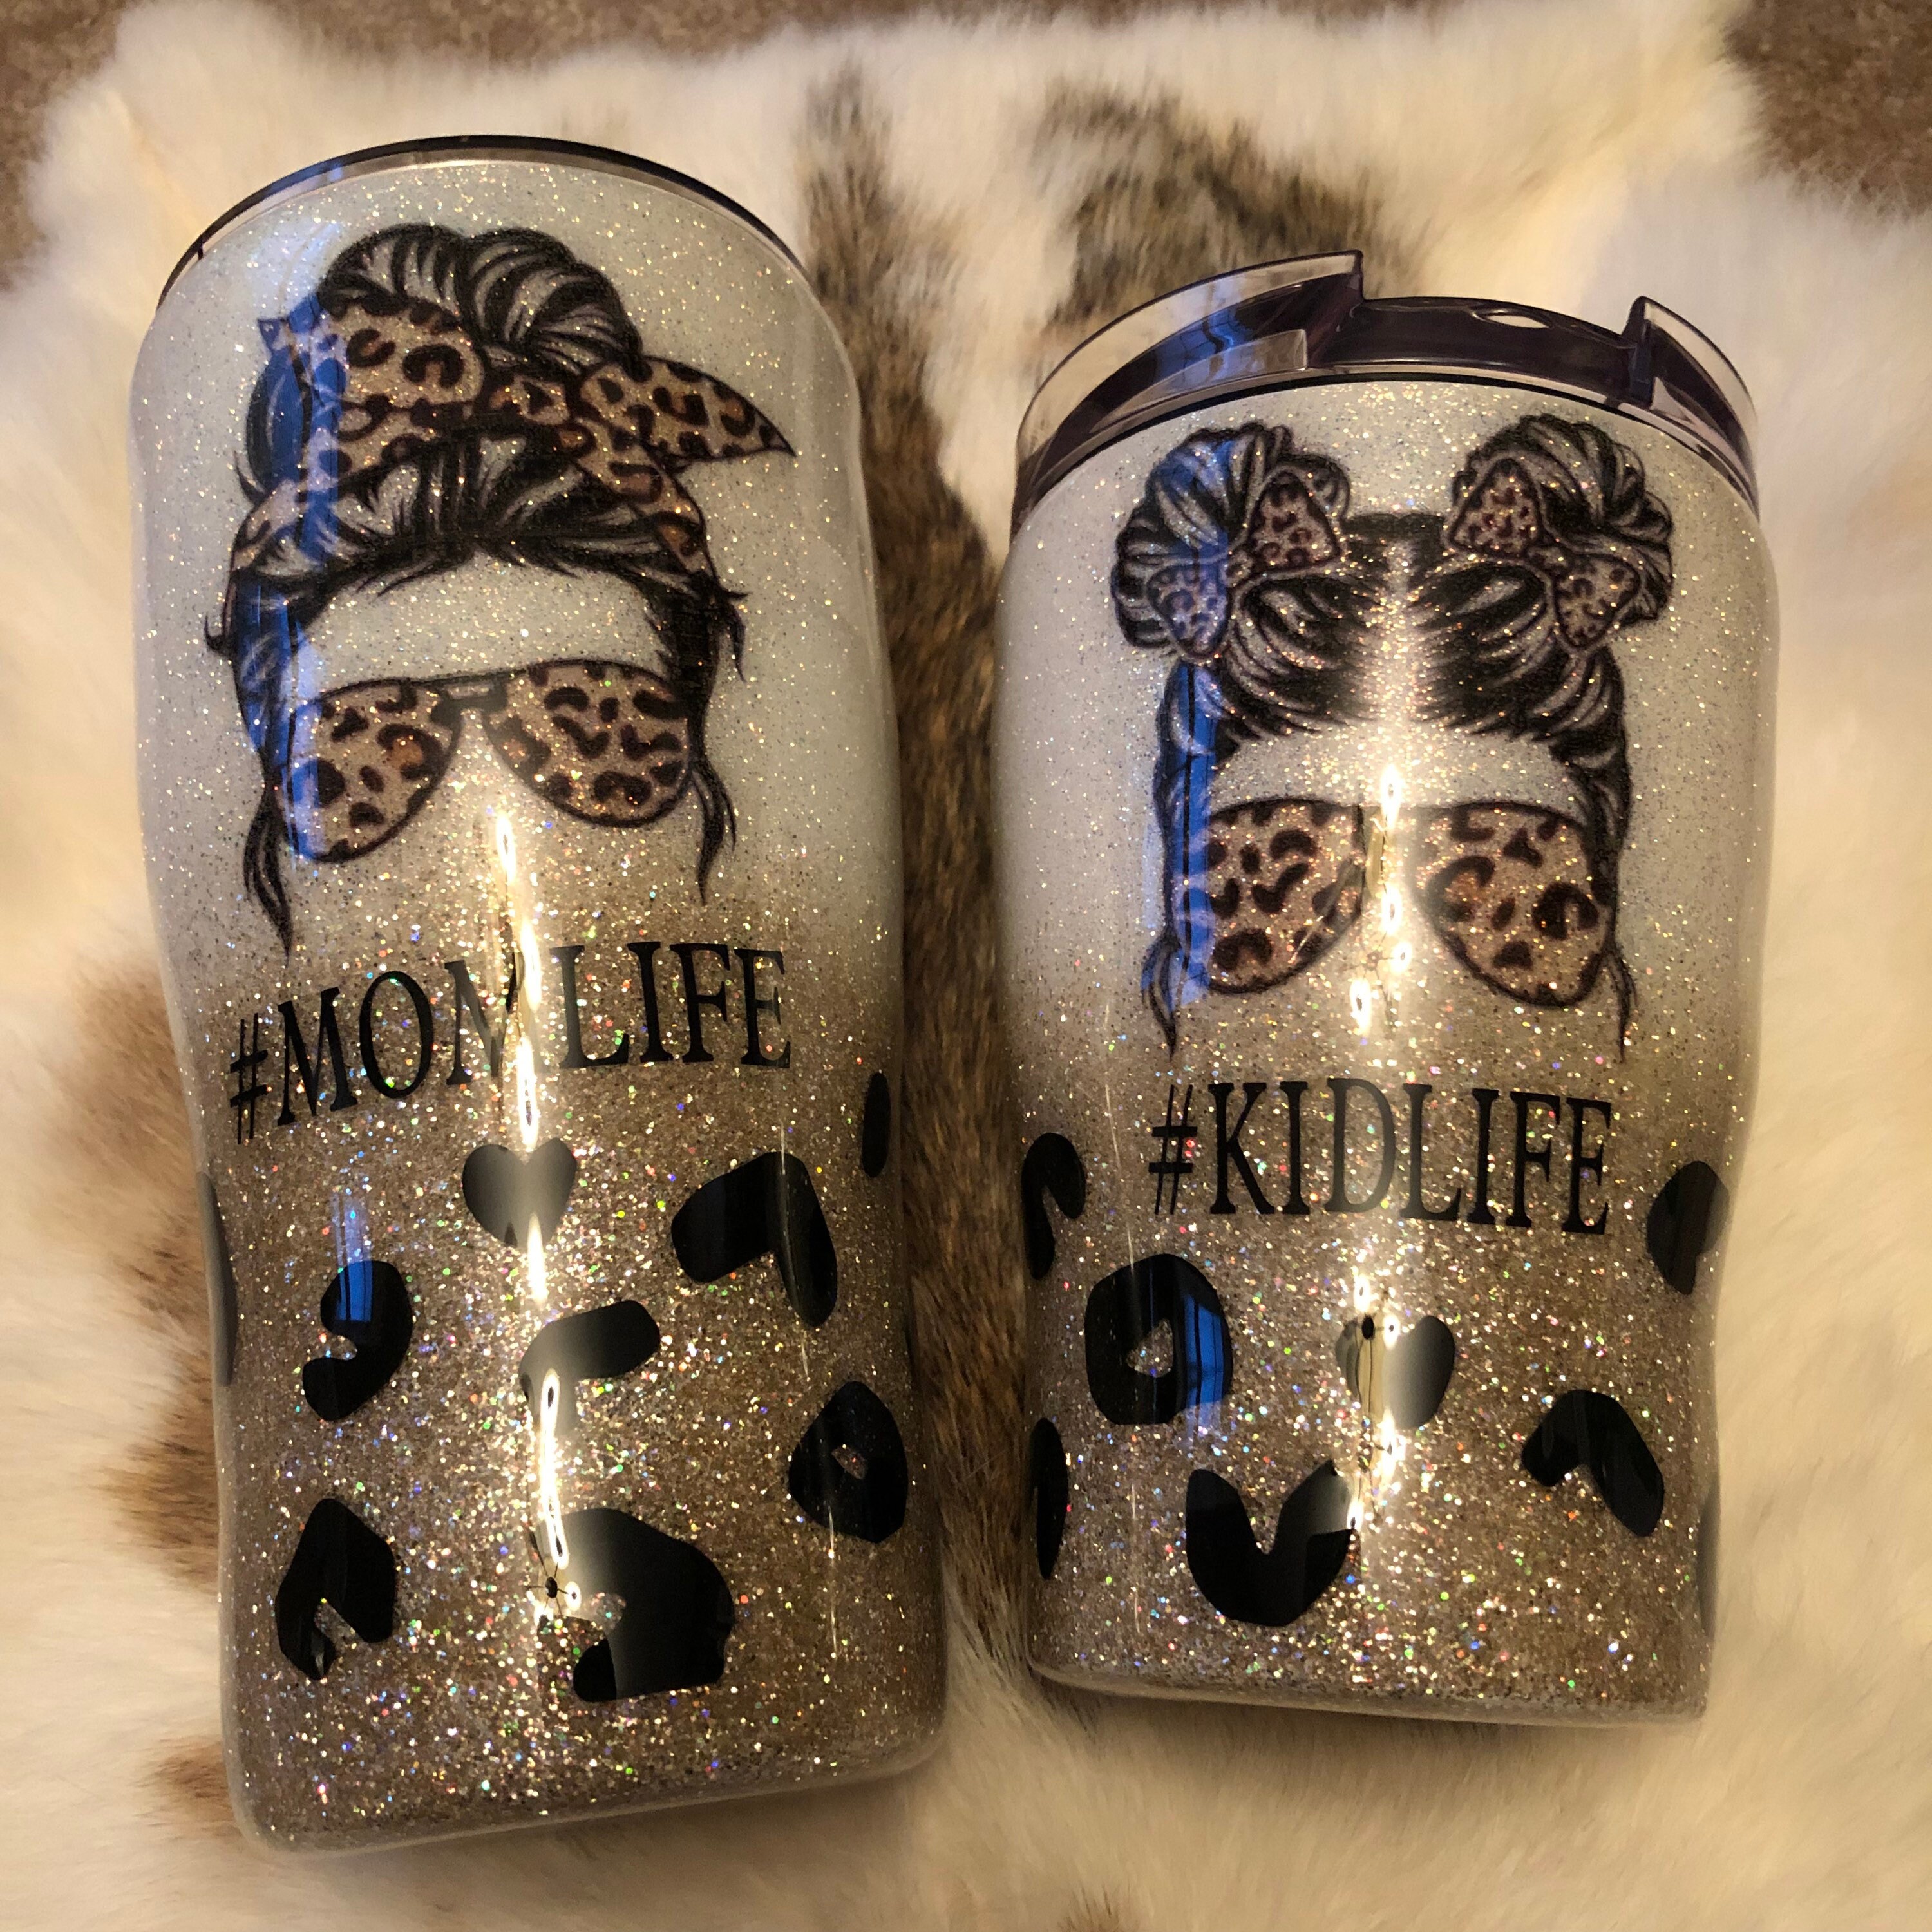 Gilmore Girls Glitter Tumbler – Coffee And Glitter Mom